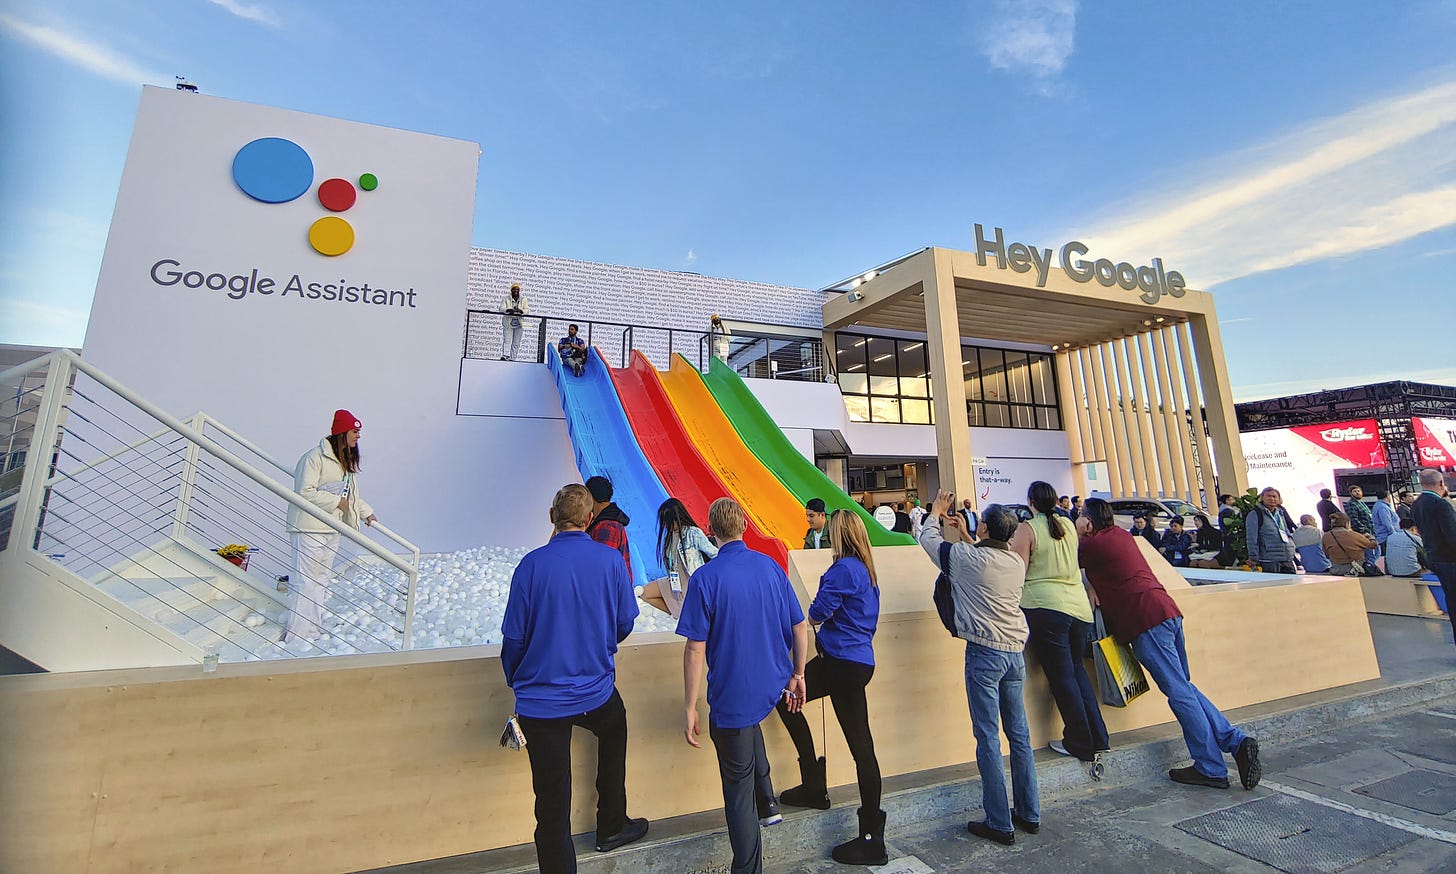 Google exhibit at CES 2020